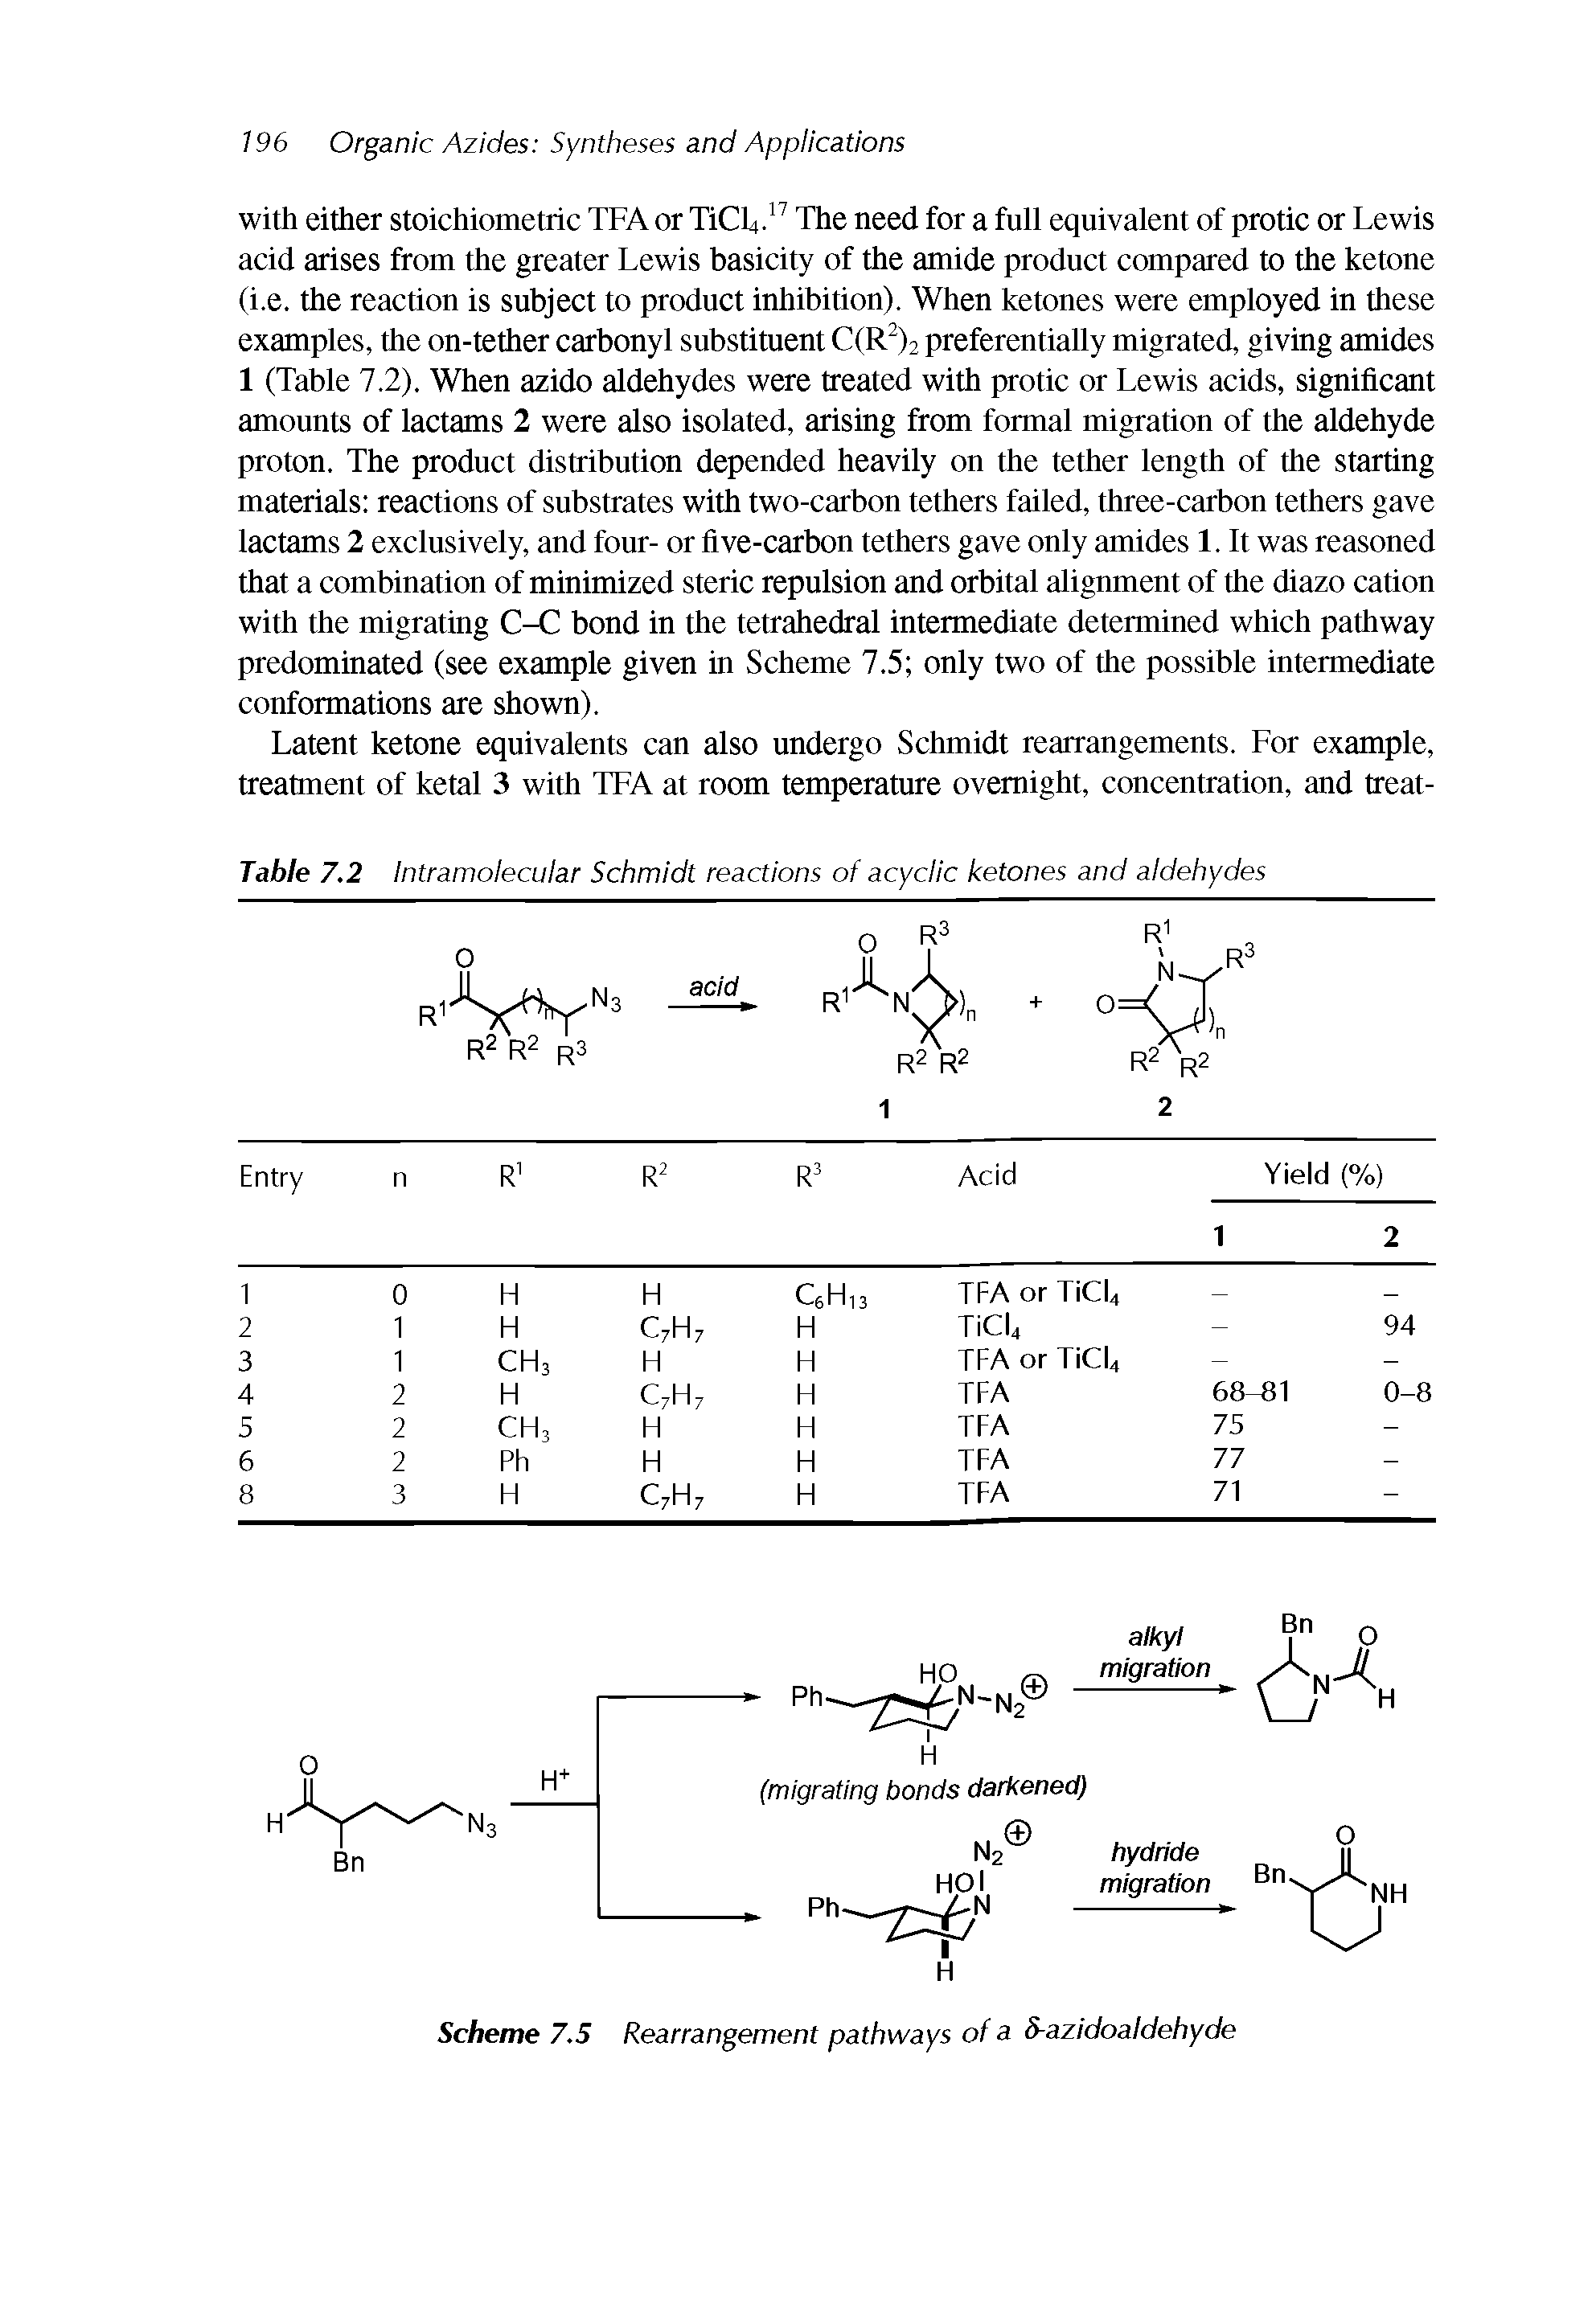 Table 7.2 Intramolecular Schmidt reactions of acyclic ketones and aldehydes...